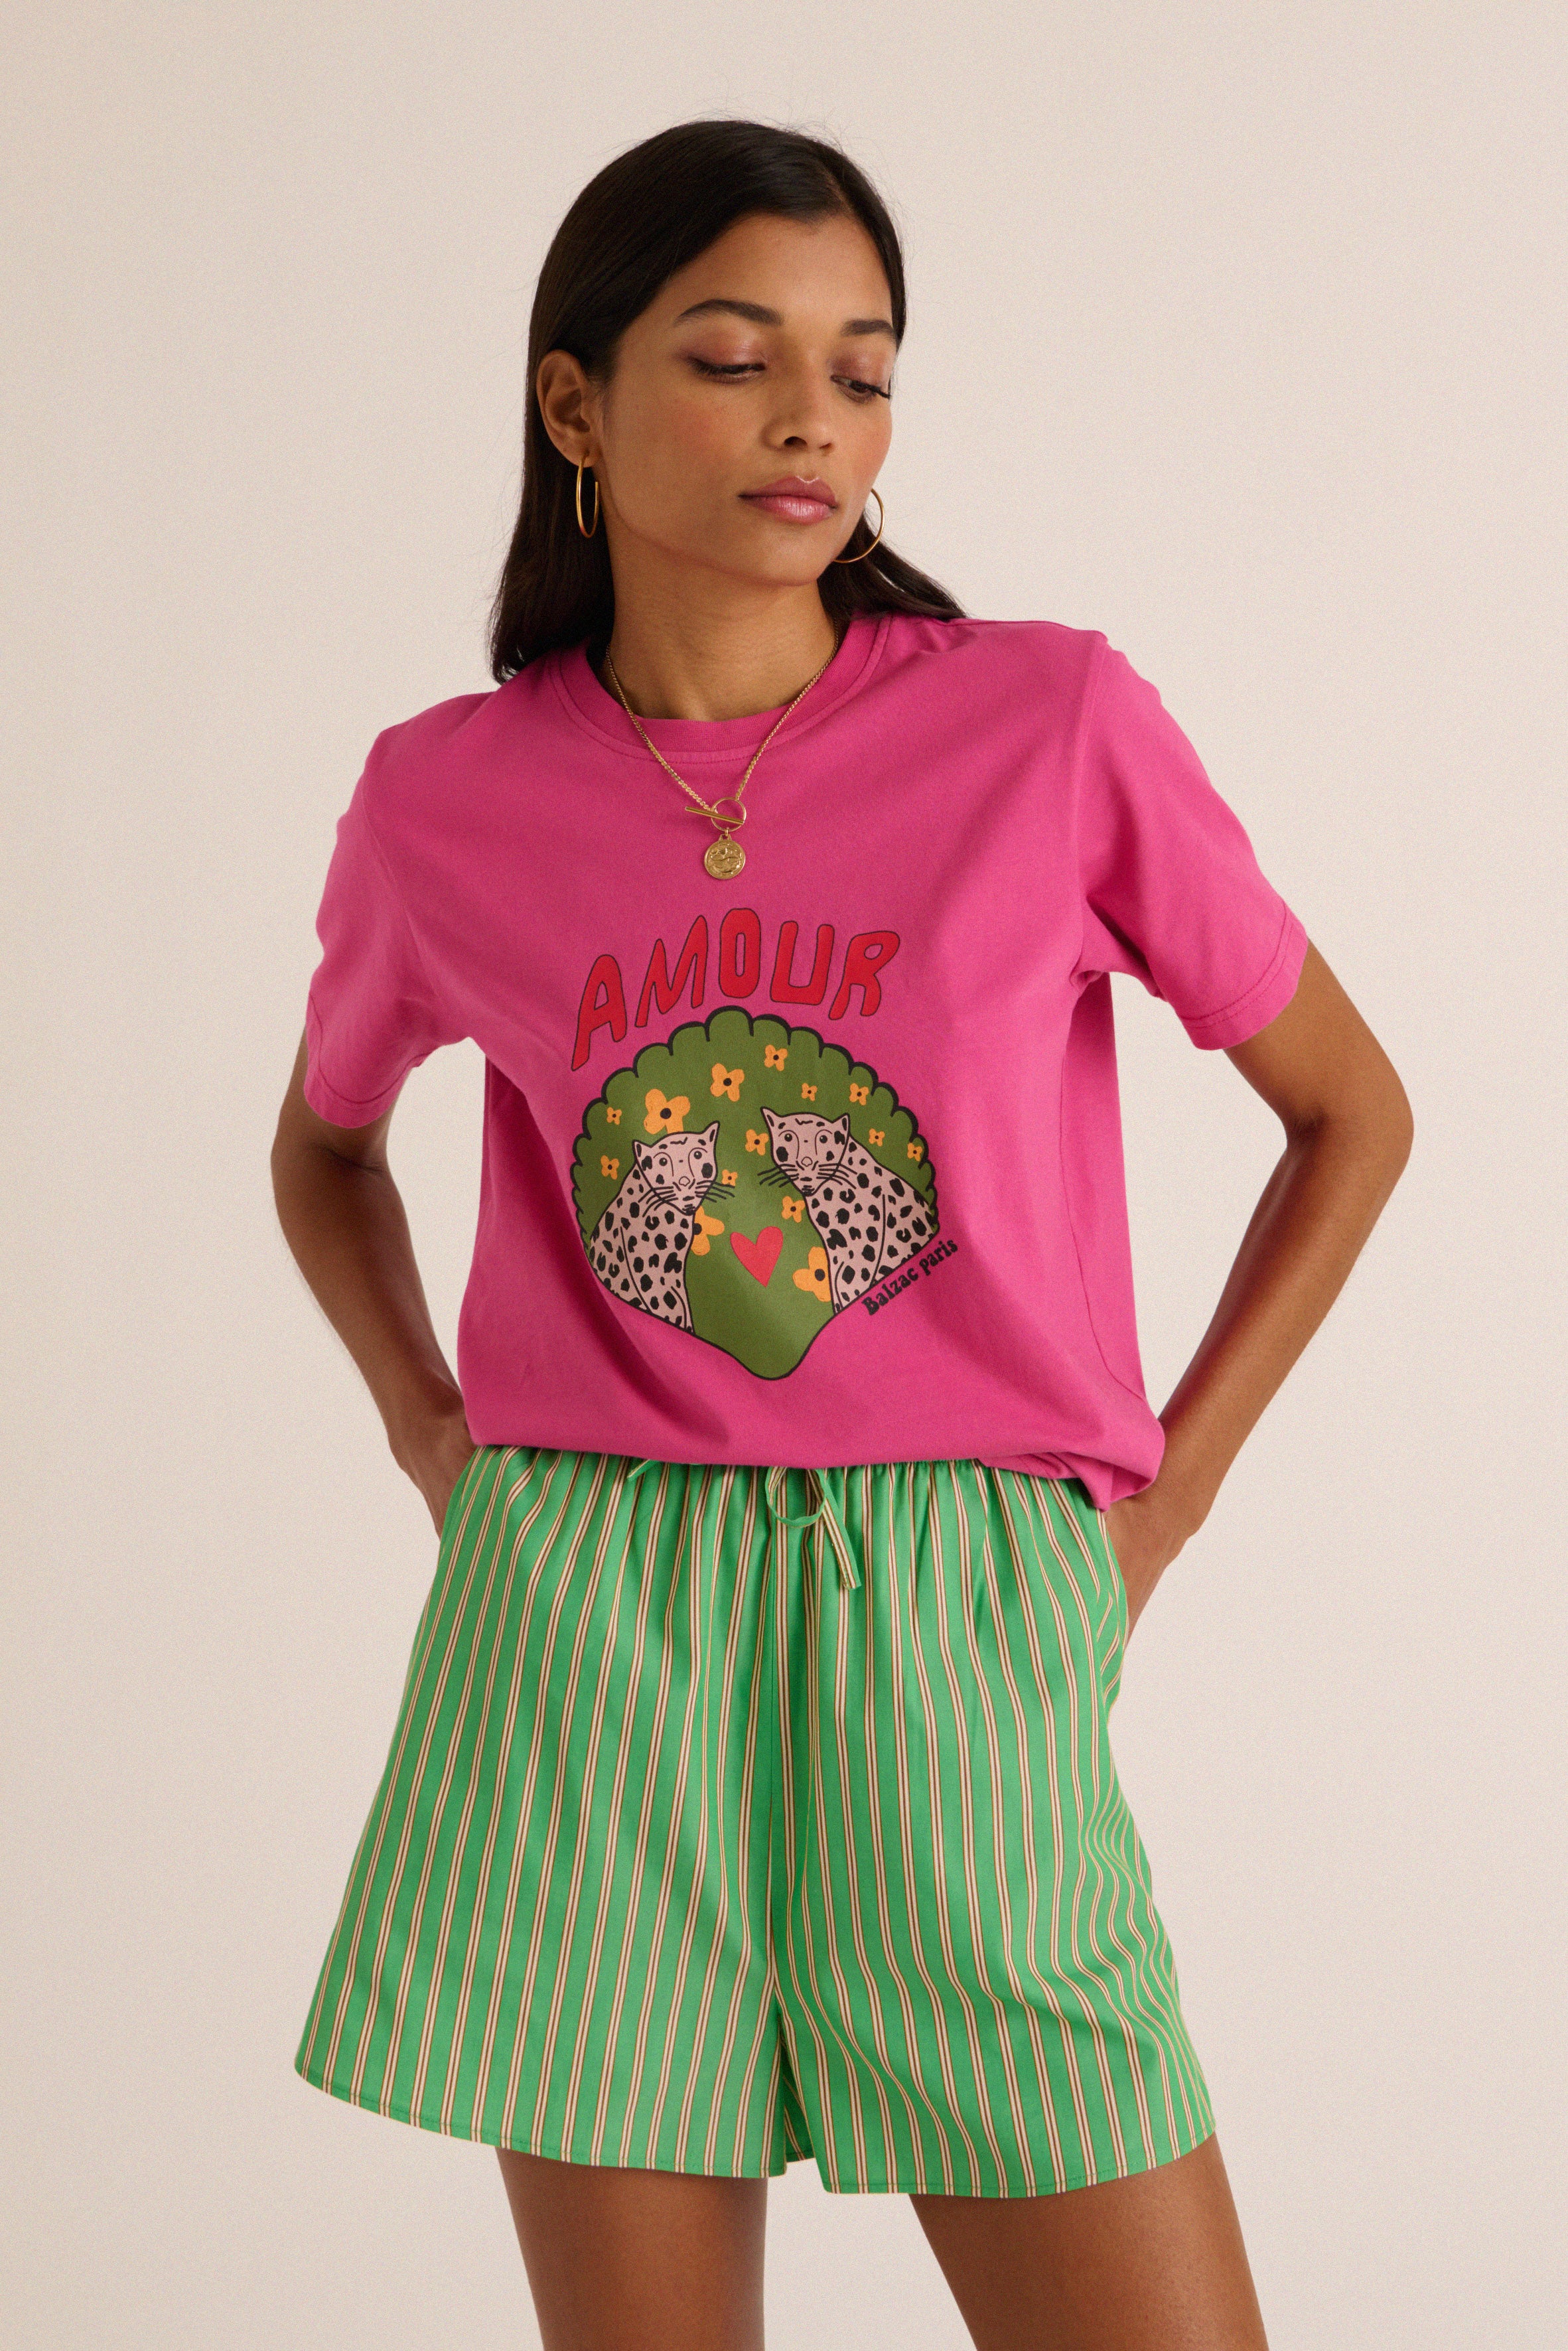 Bree Amour de Léo pink t-shirt